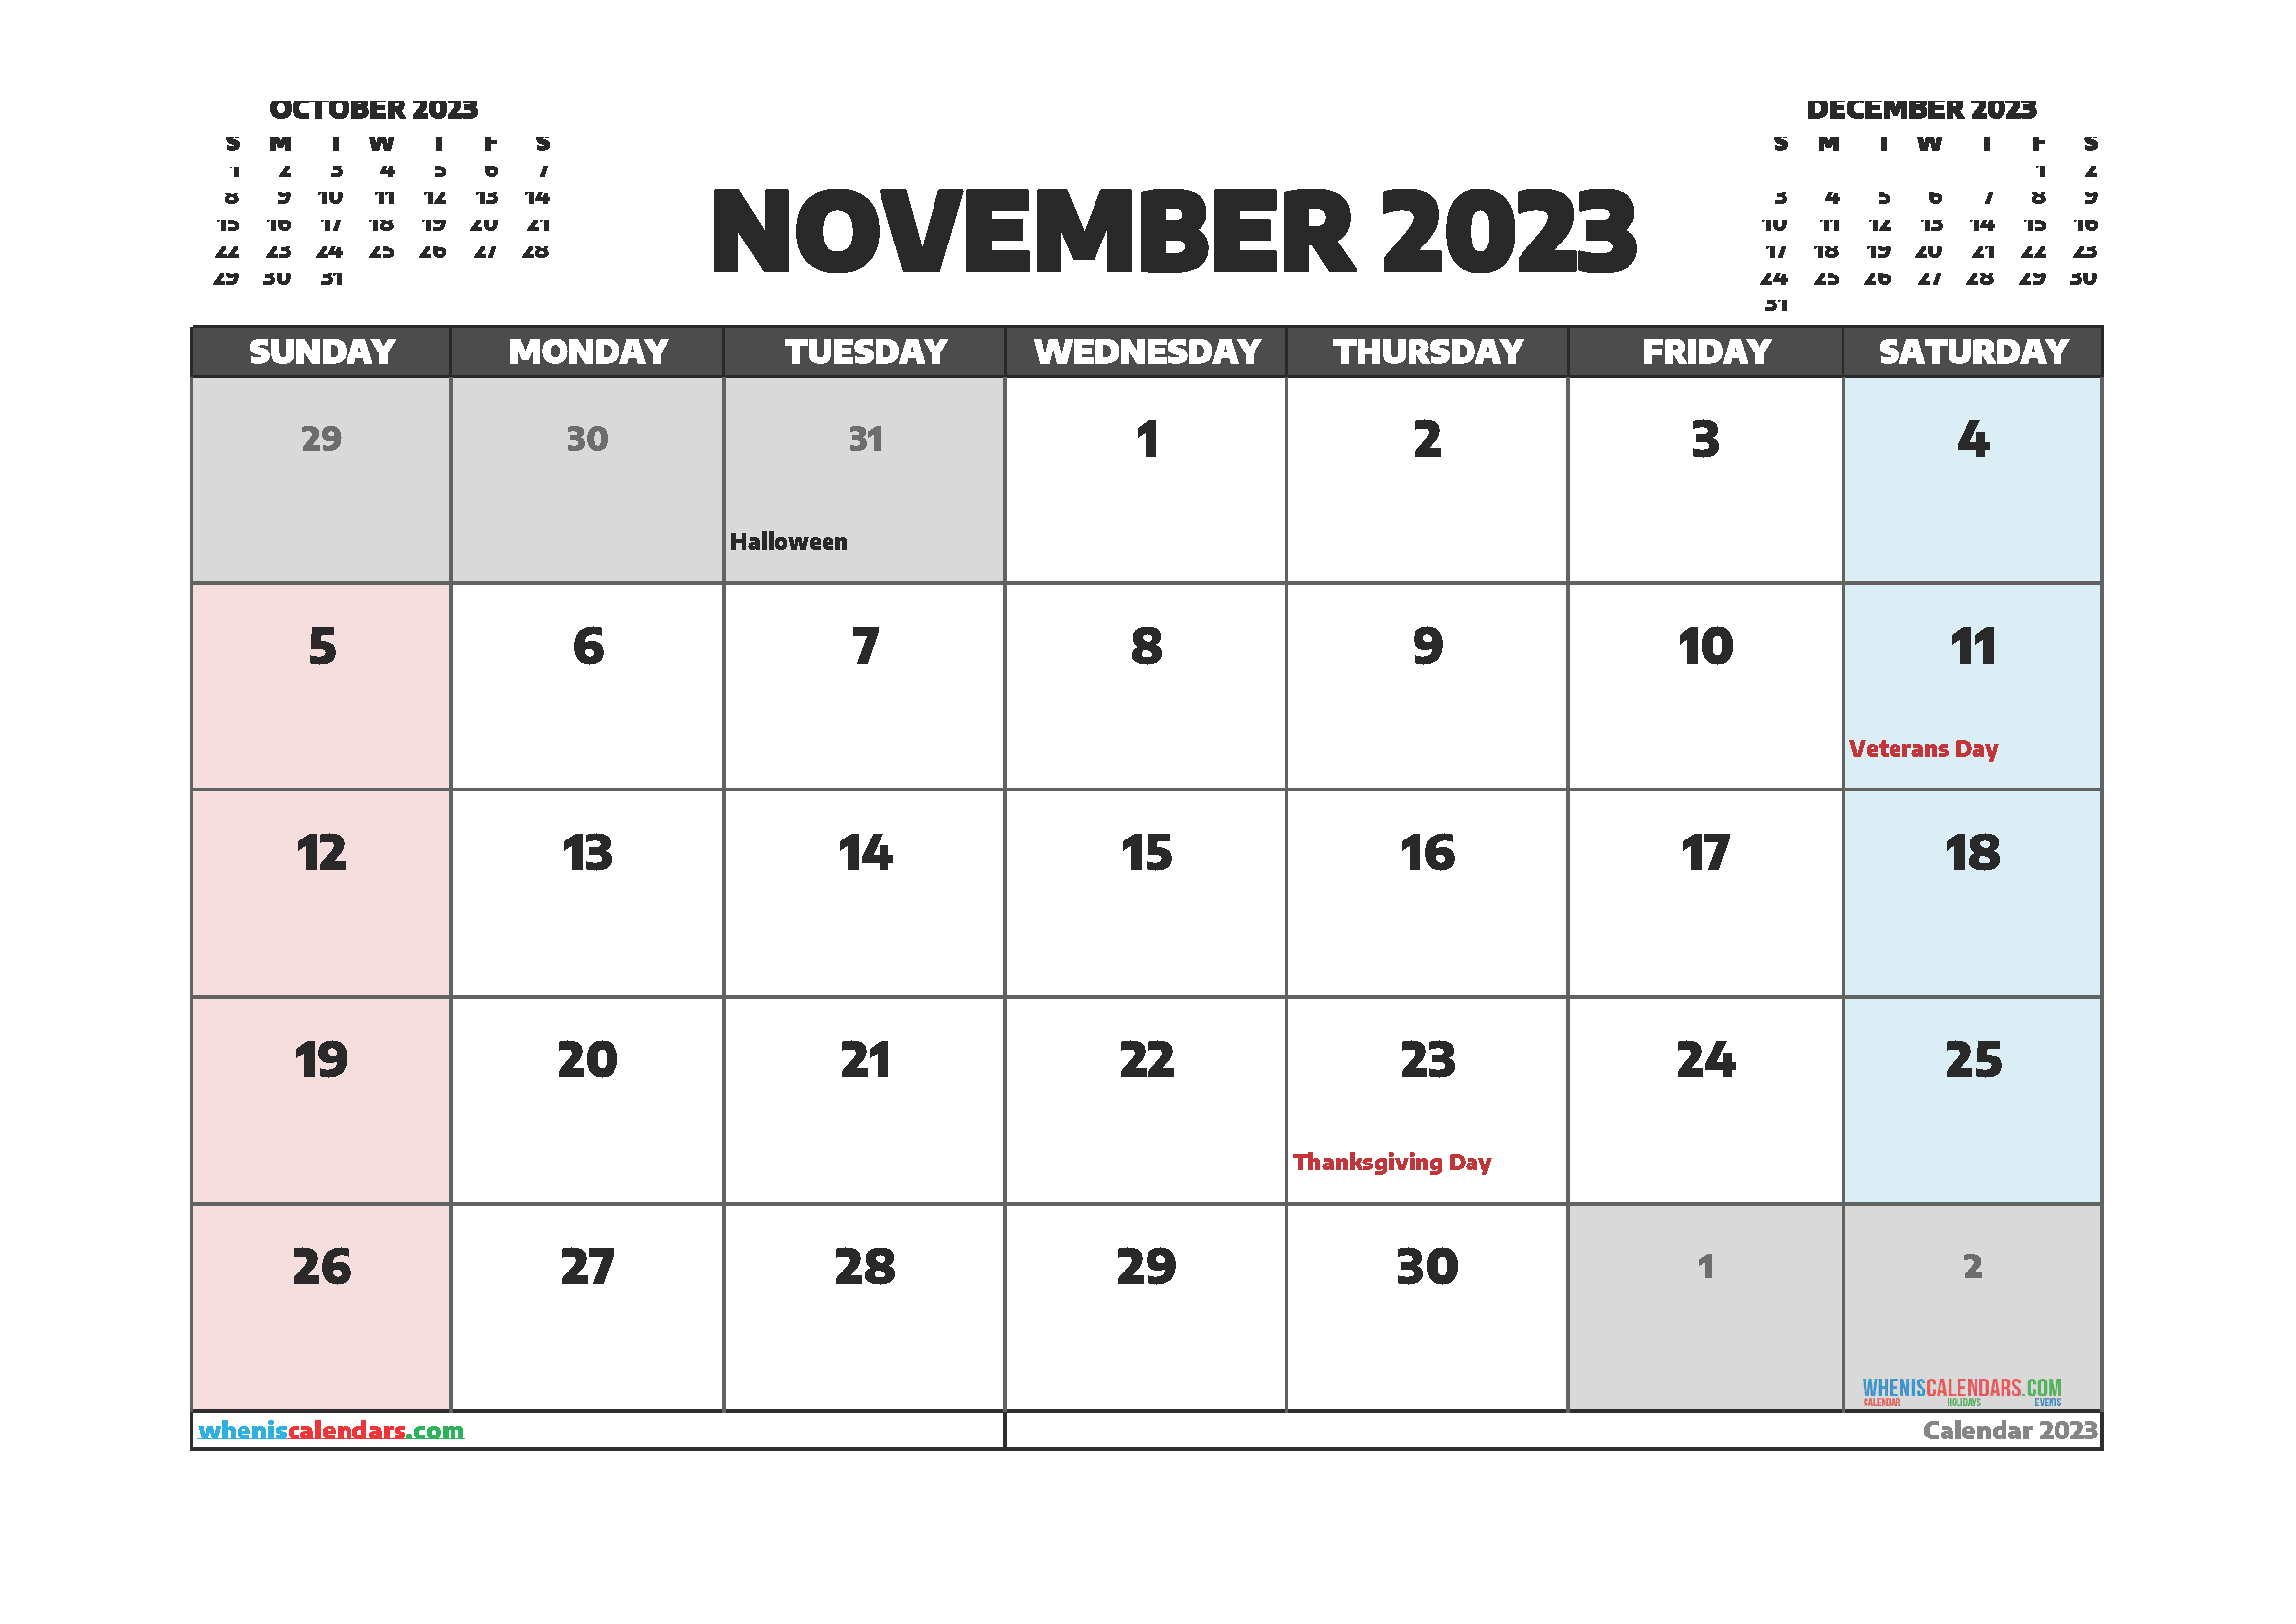 printable-november-2023-calendar-free-12-templates